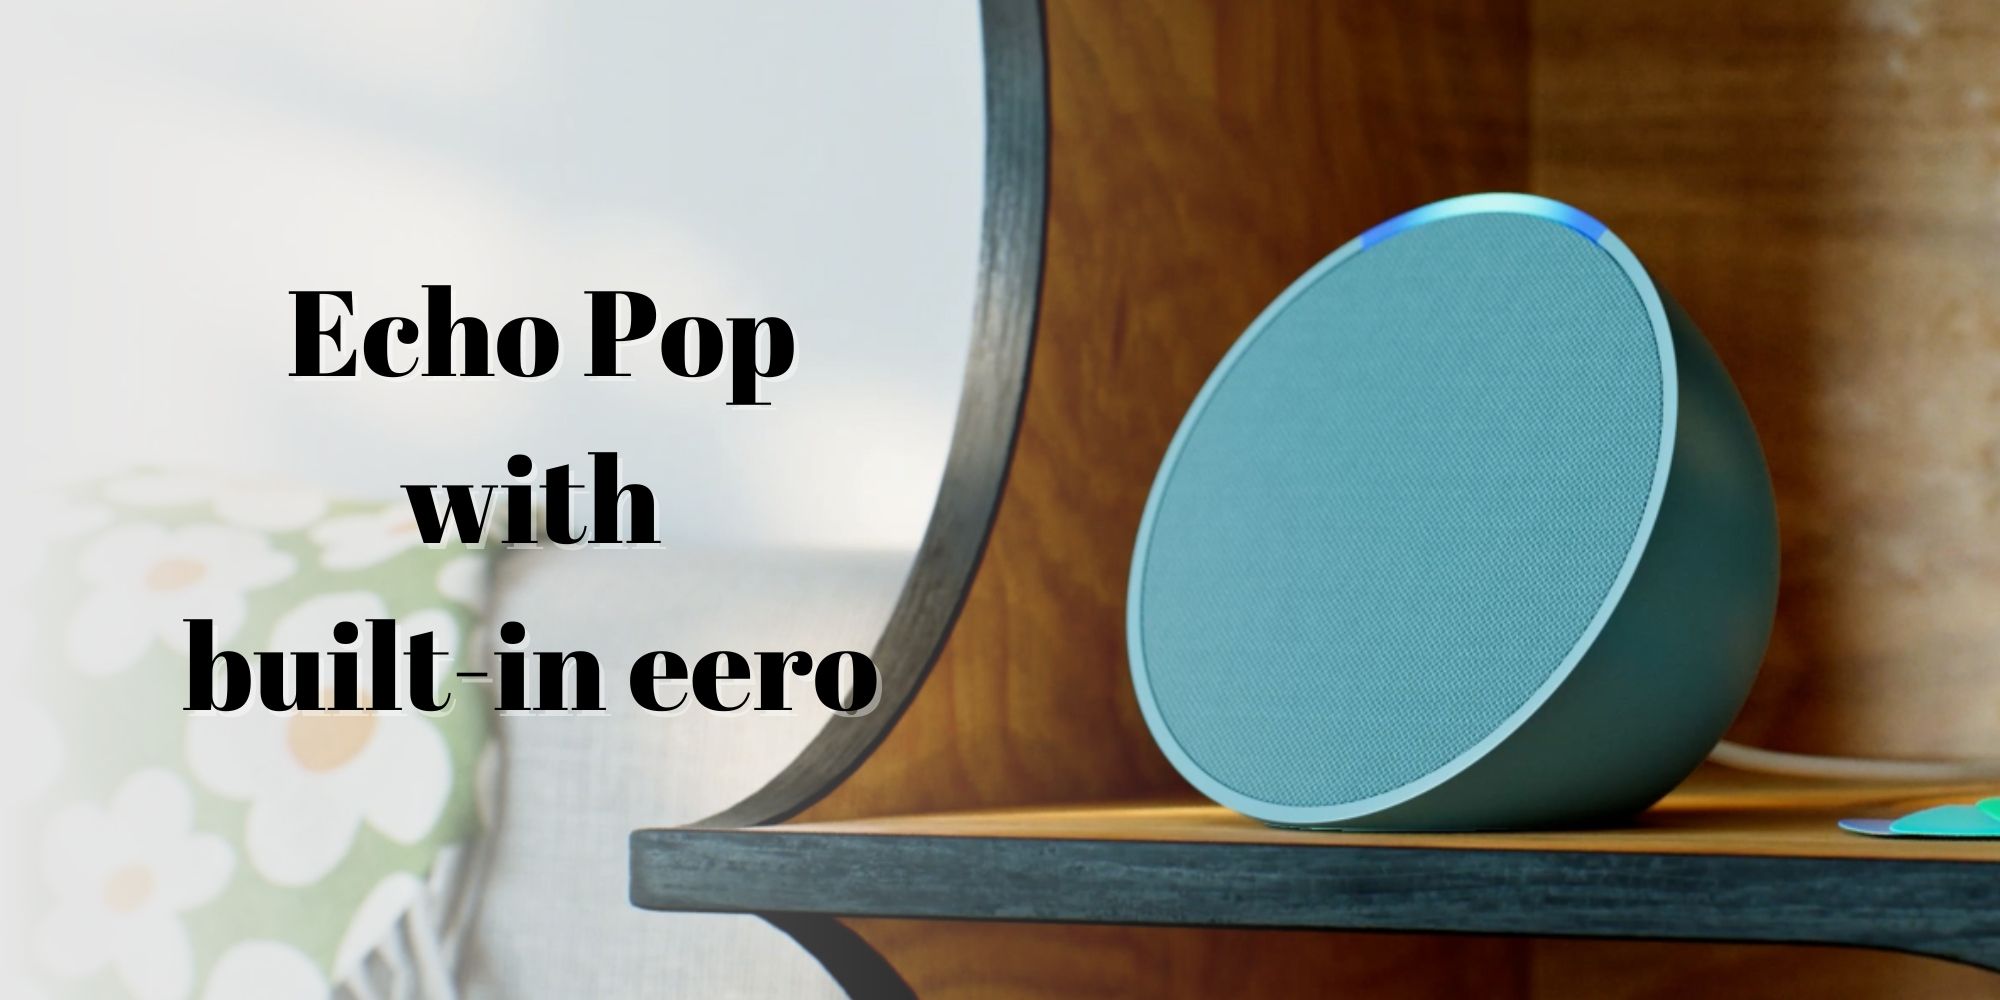 Echo Pop smart speaker announced